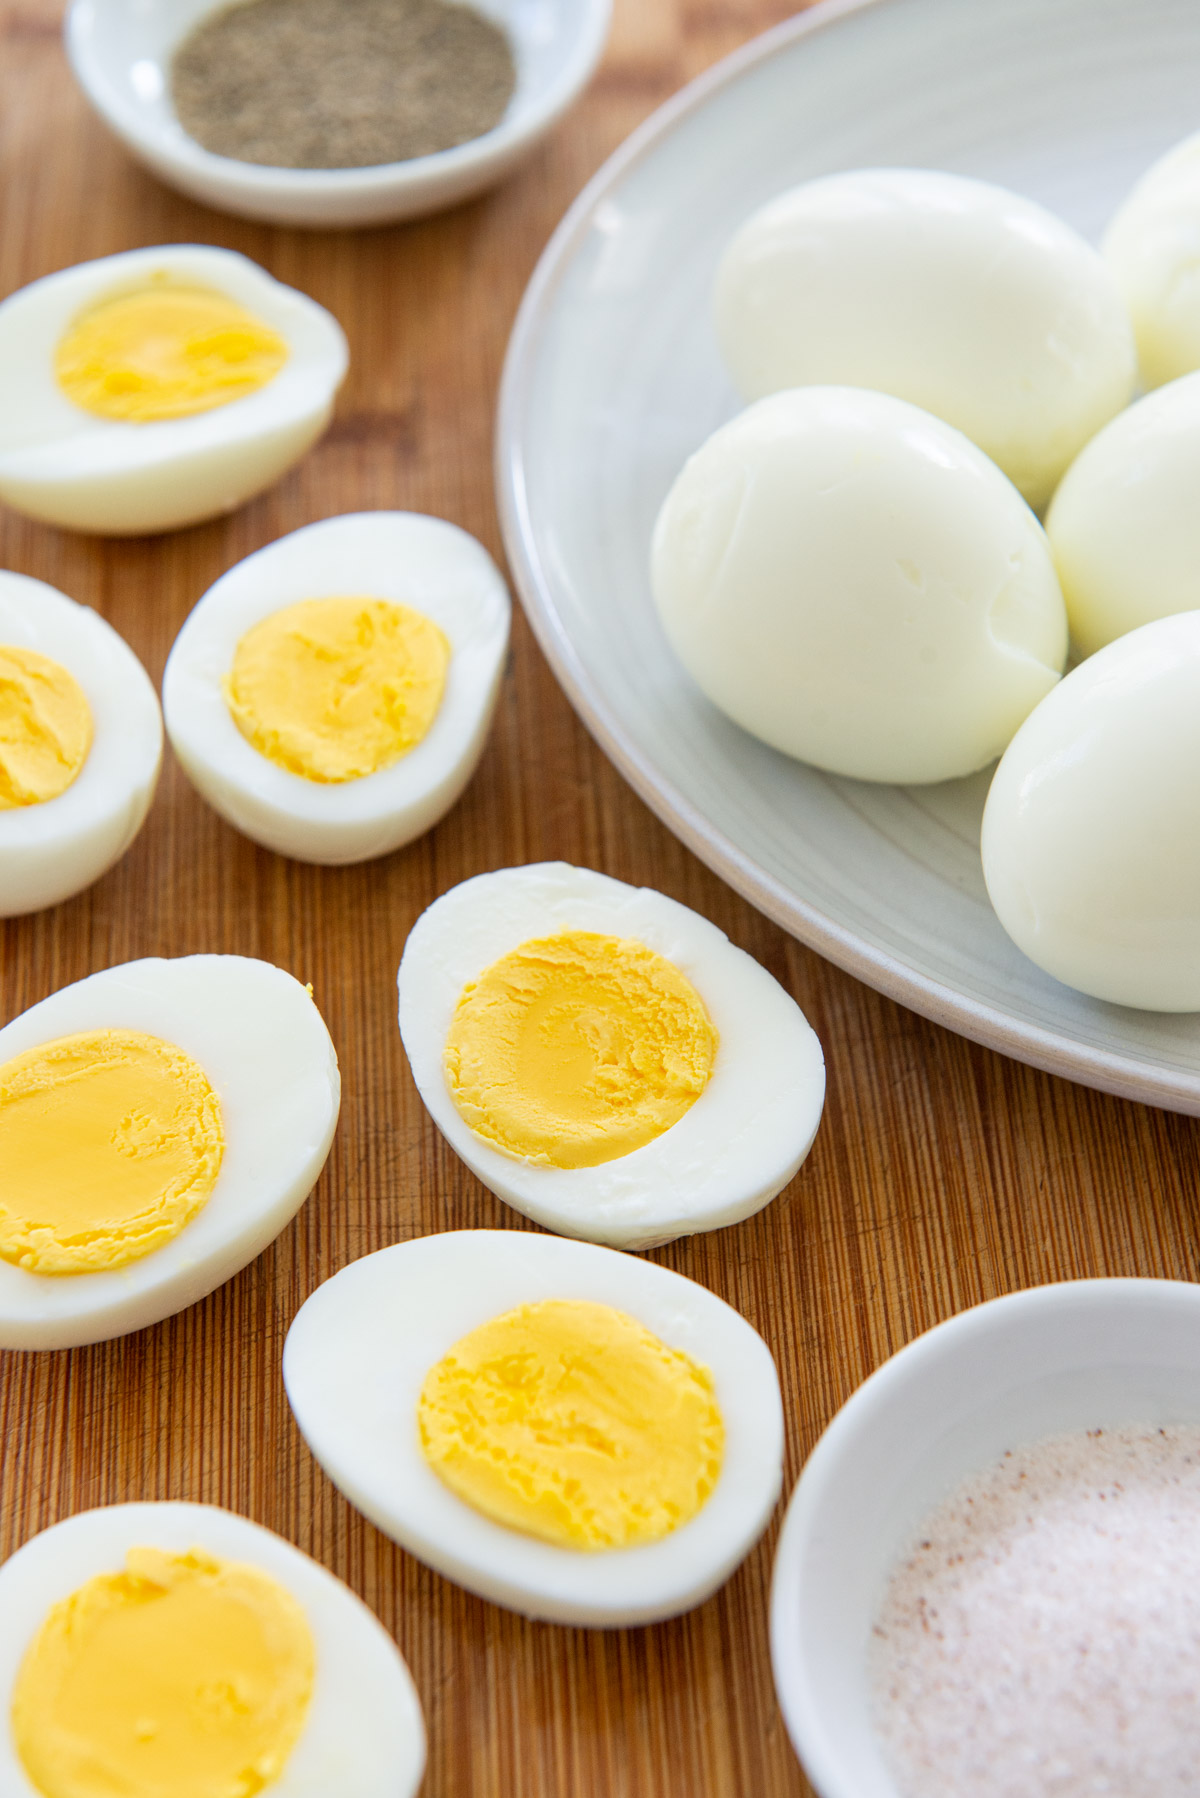 https://www.fifteenspatulas.com/wp-content/uploads/2021/07/Hard-Boiled-Eggs-1.jpg